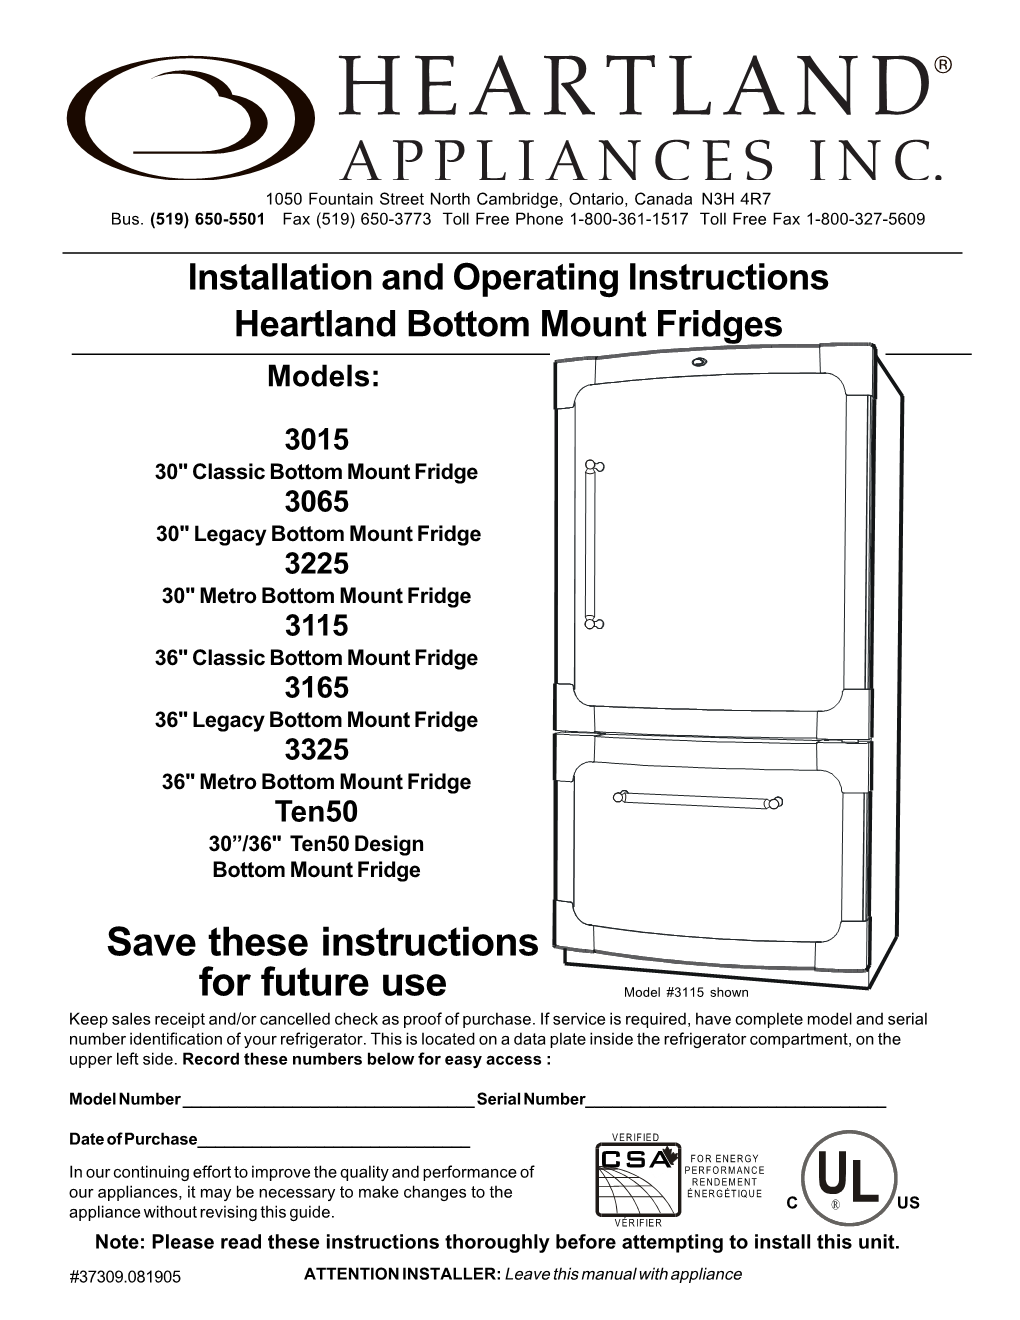 Installation and Operating Instructions Heartland Bottom Mount Fridges Models